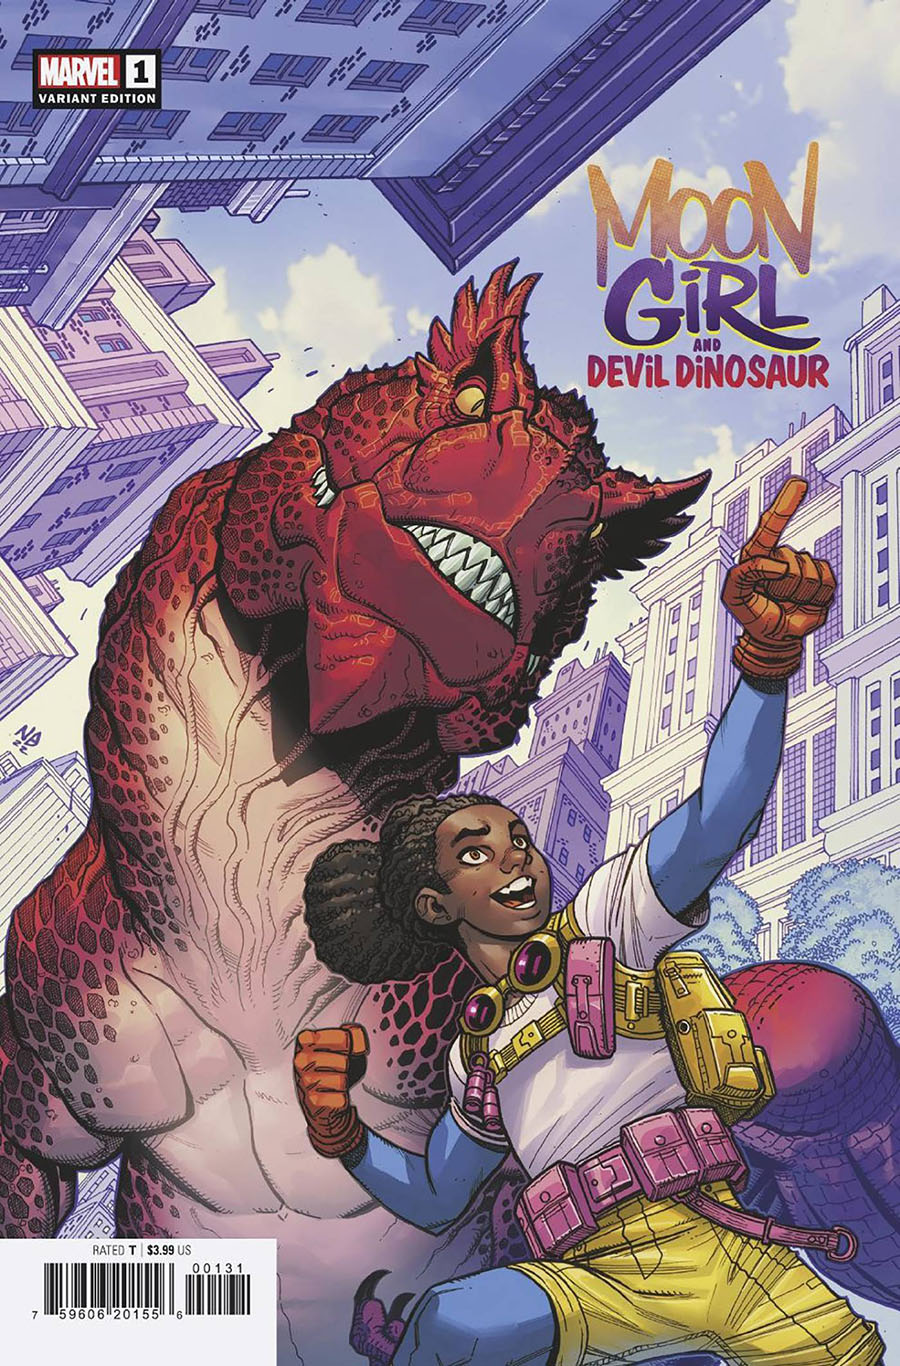 Moon Girl And Devil Dinosaur Vol 2 #1 Cover B Variant Nick Bradshaw Cover